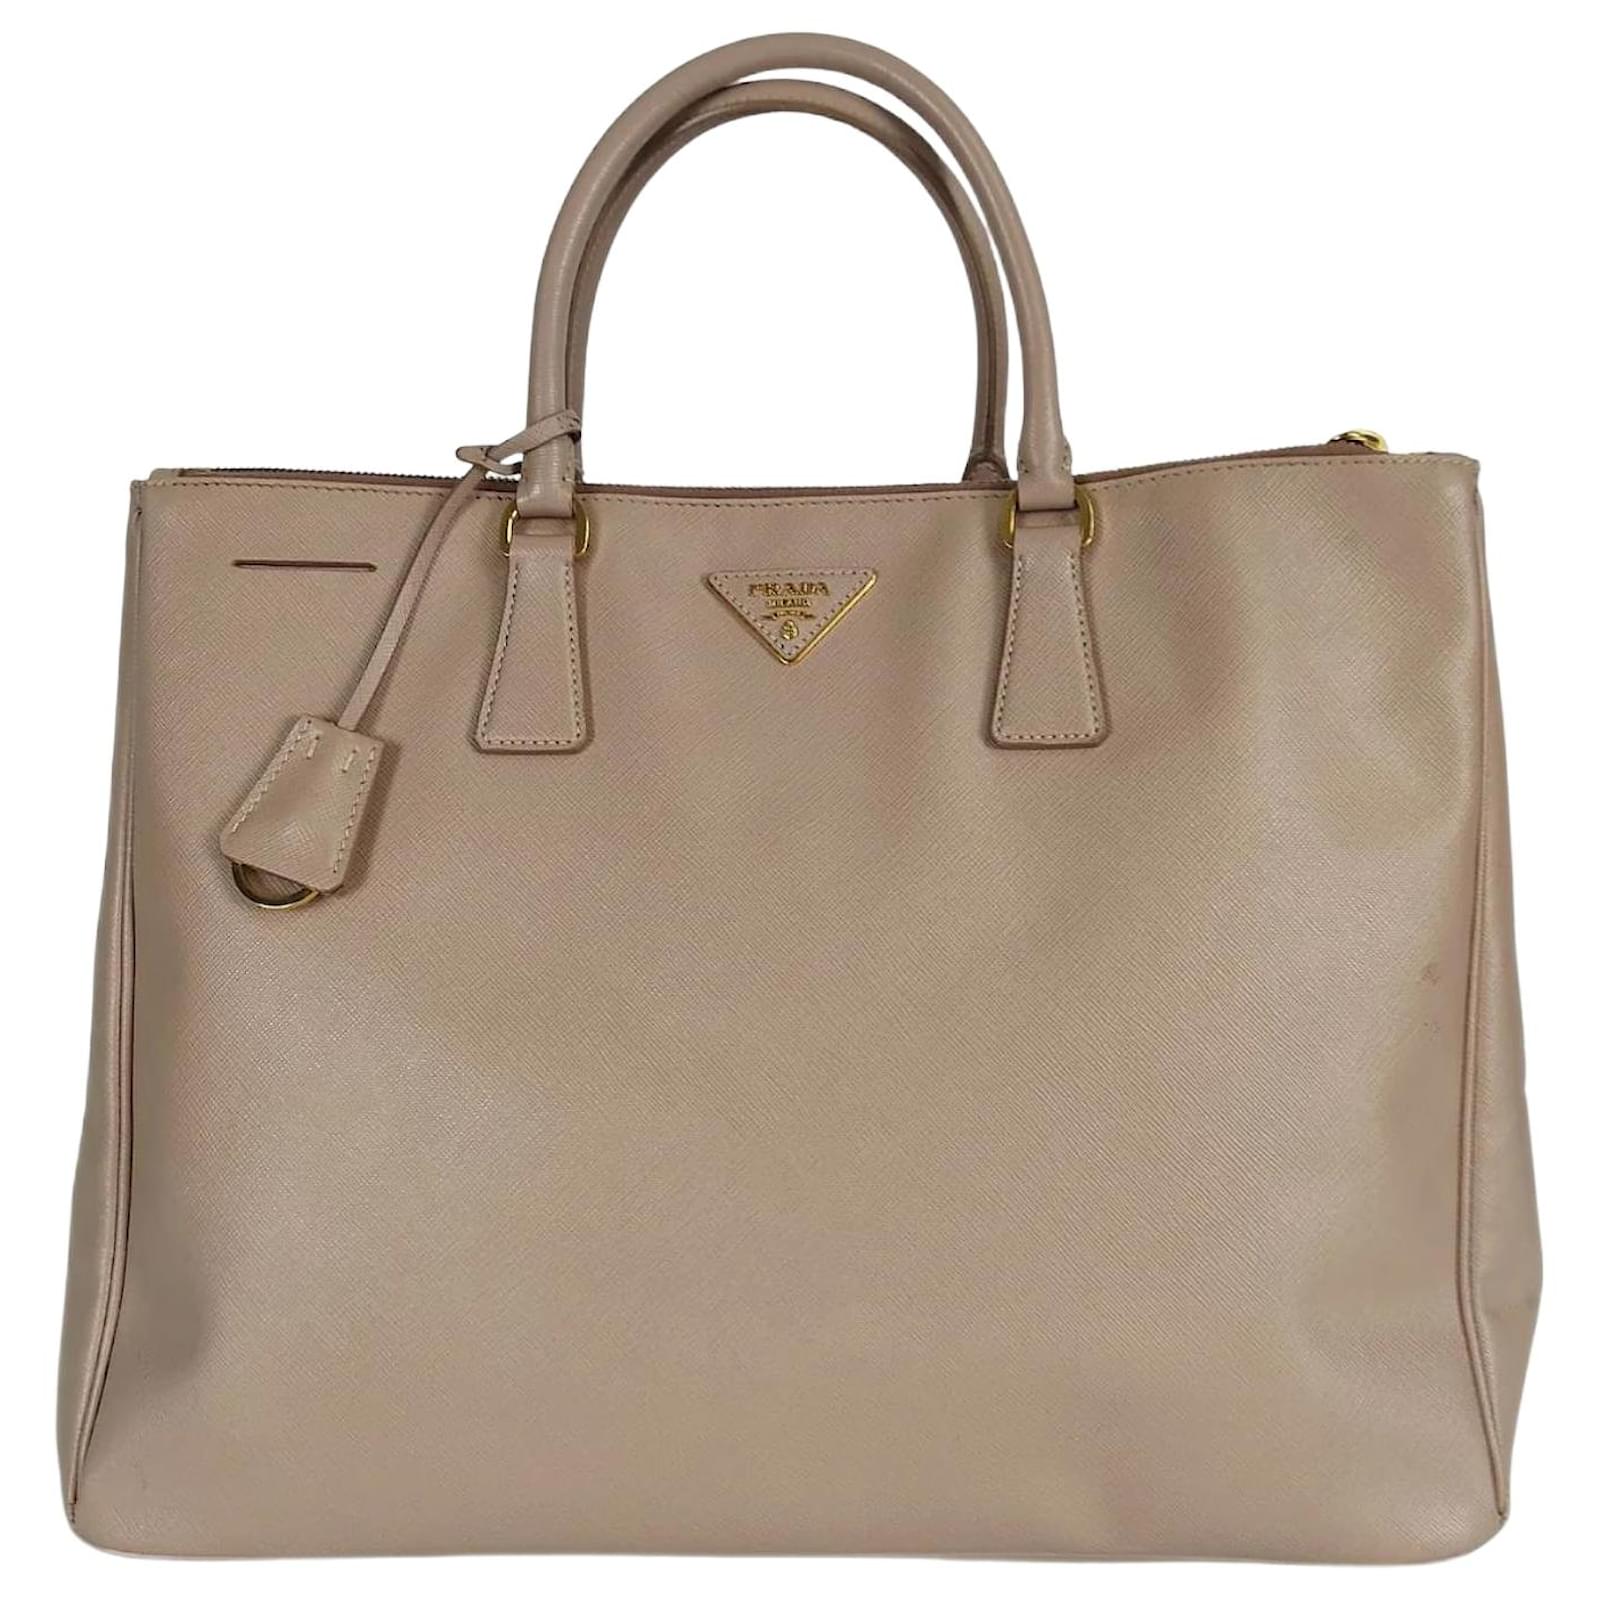 Prada Prada Galleria Extra Large handbag in pink Saffiano Leather